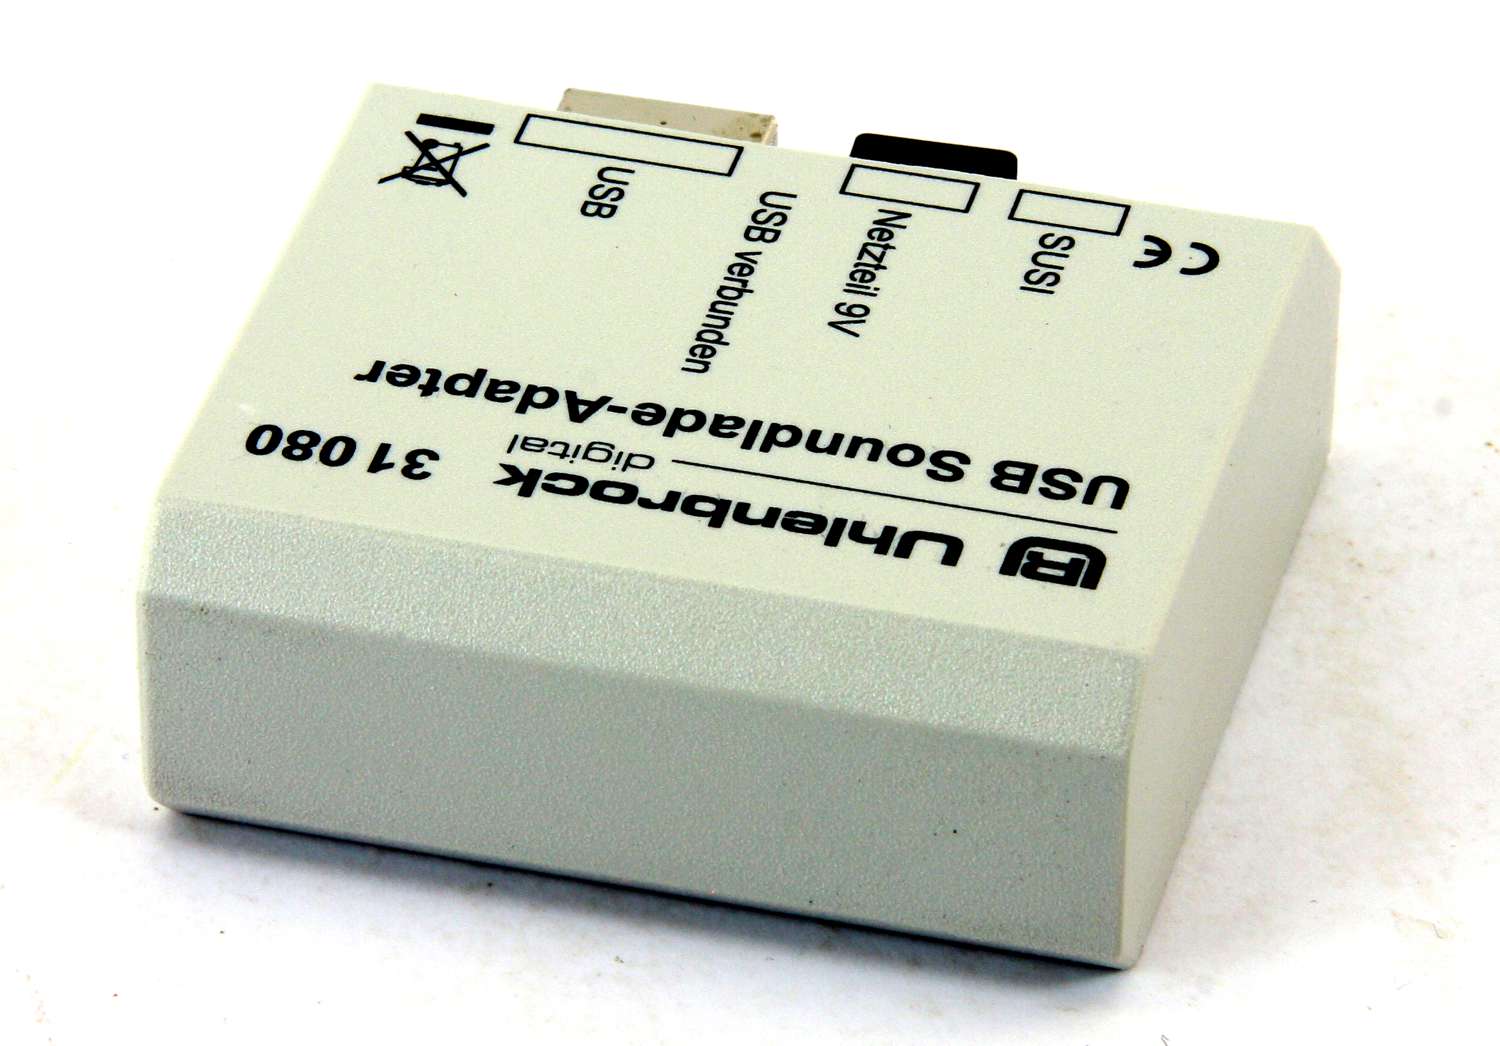 Uhlenbrock 31080 - IntelliSound USB-Ladeadapter